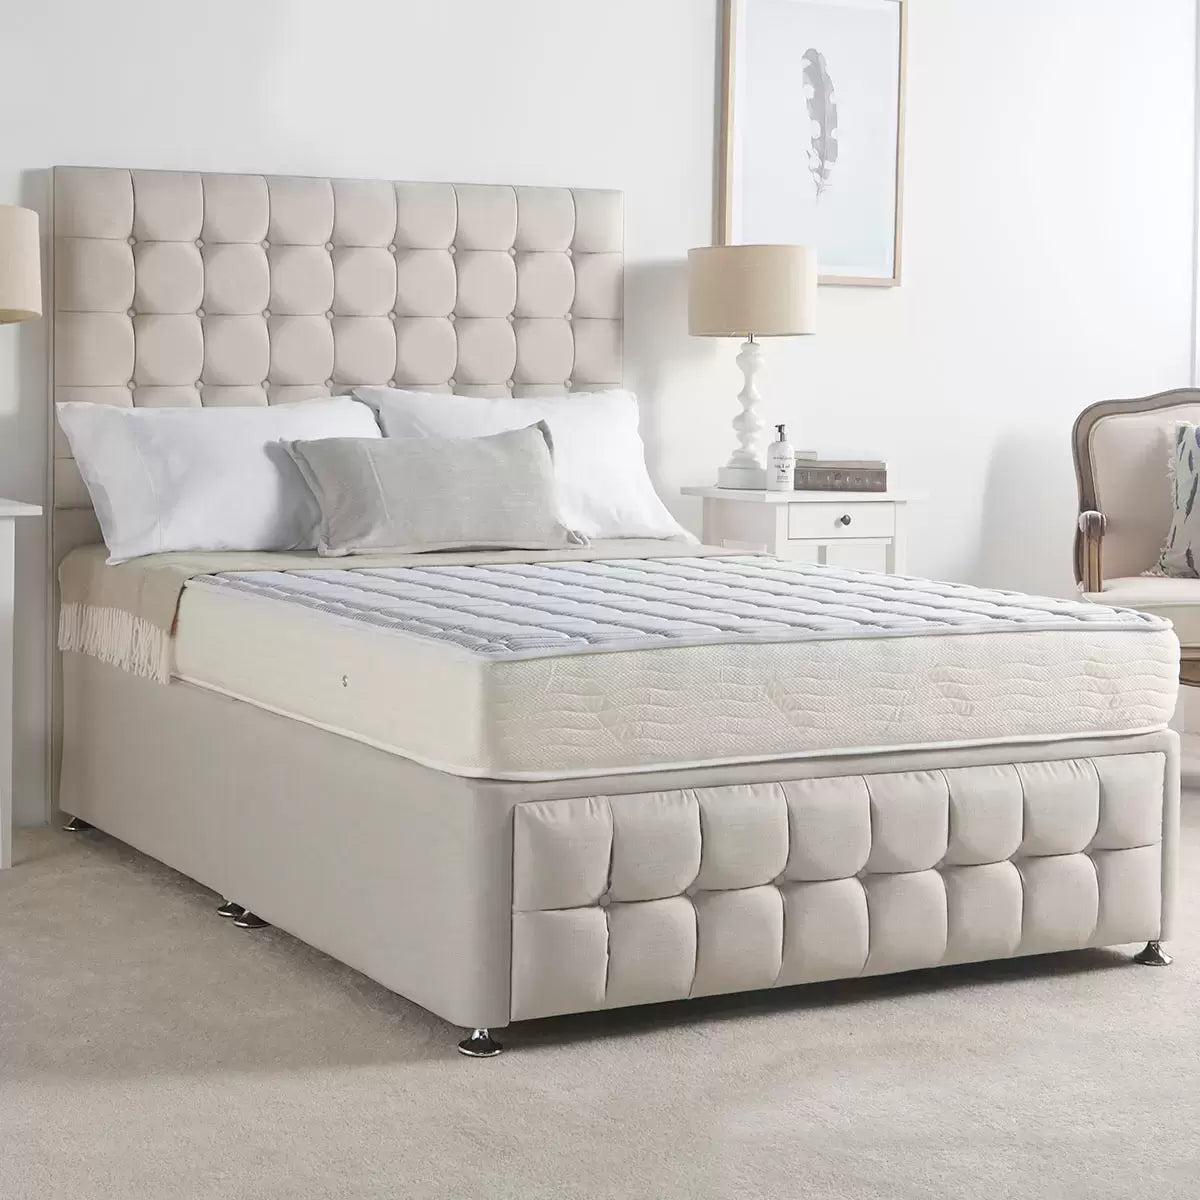 Ecocell foam mattress